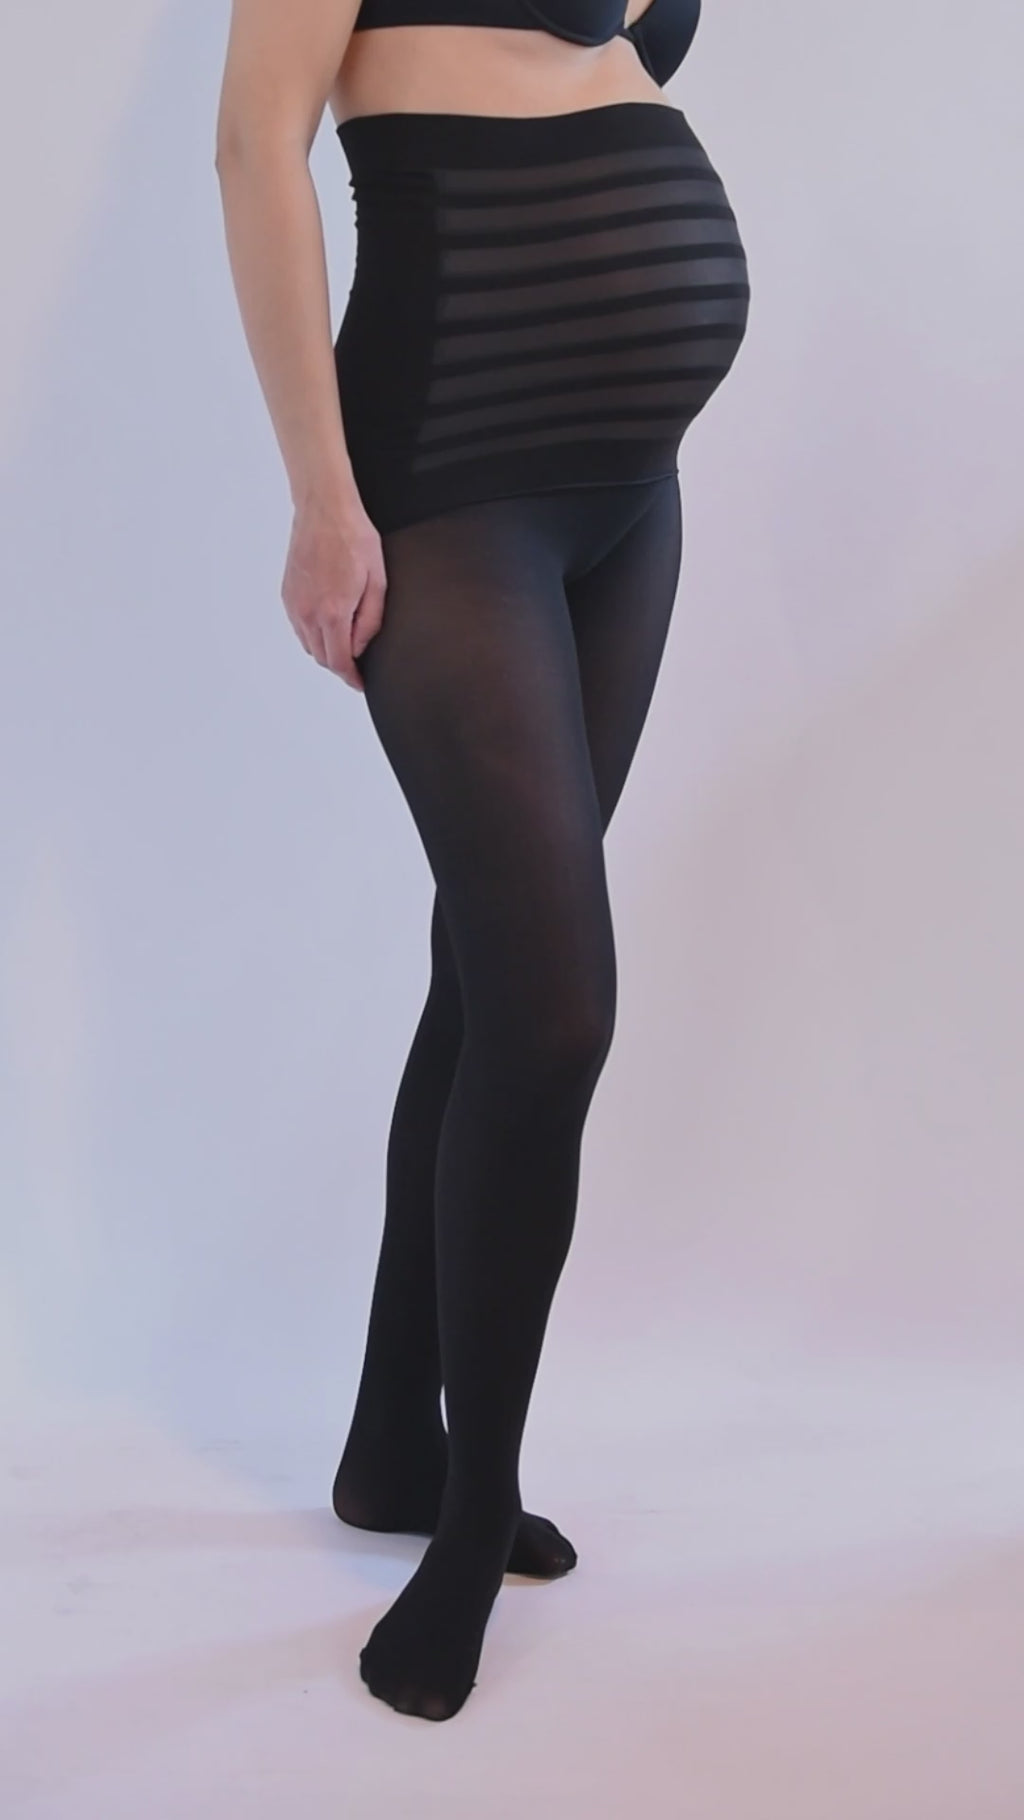 Calzedonia SEAMLESS-FEIN - Leggings - Trousers - schwarz/black 